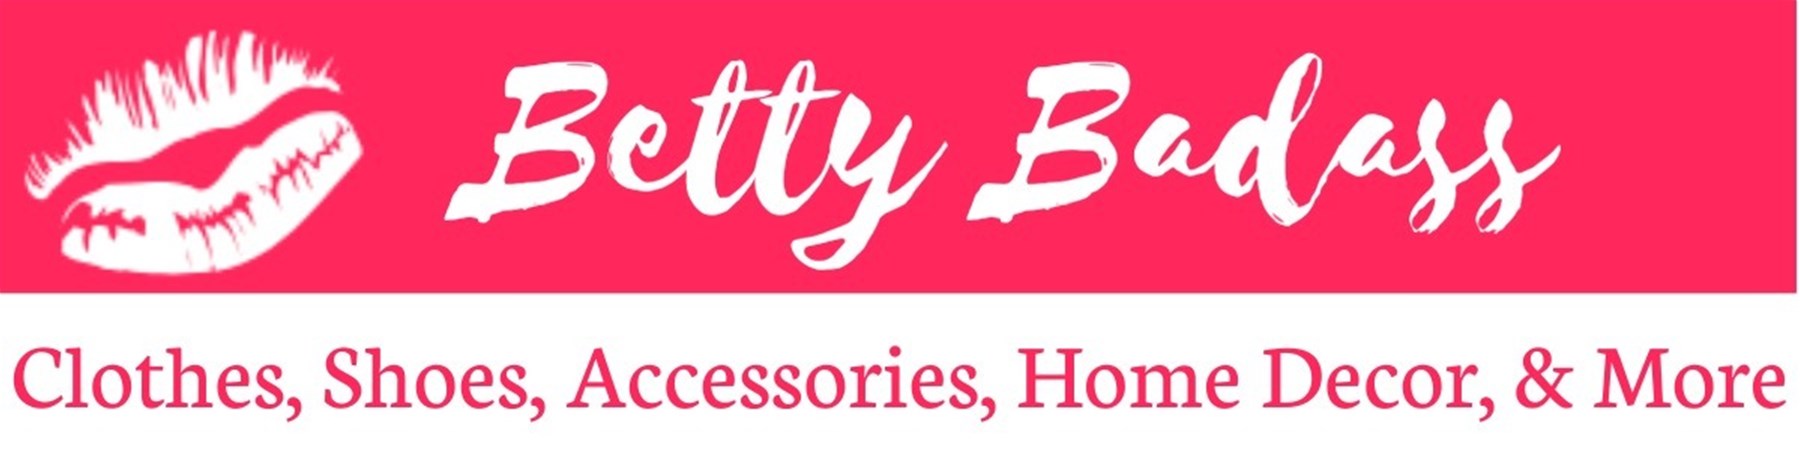 Betty Badass Clothes Banner